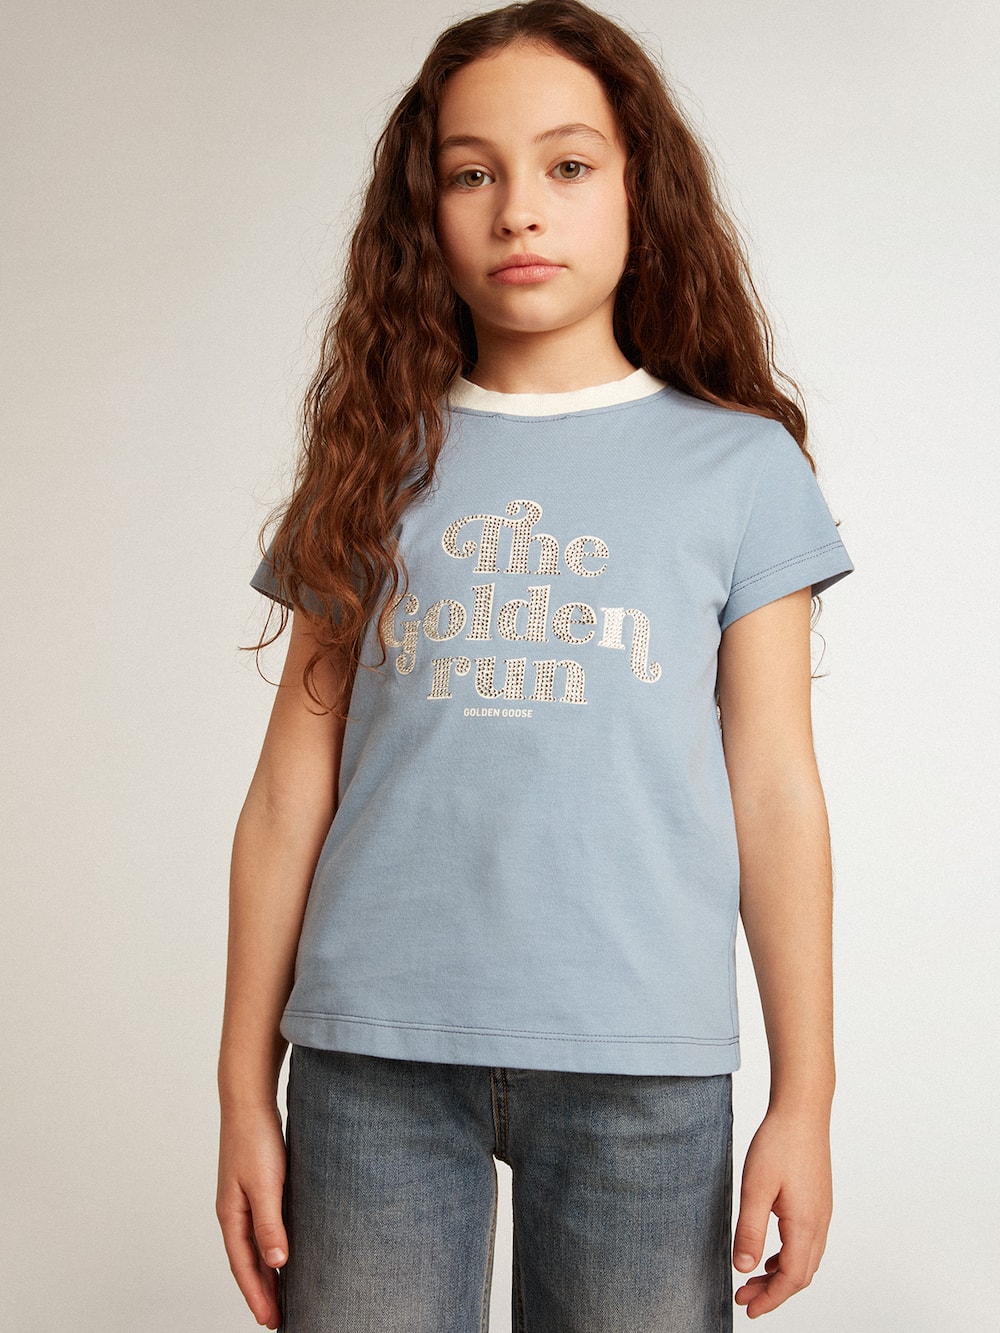 Golden Goose - Camiseta de niña de algodón celeste con estampado con cristales in 